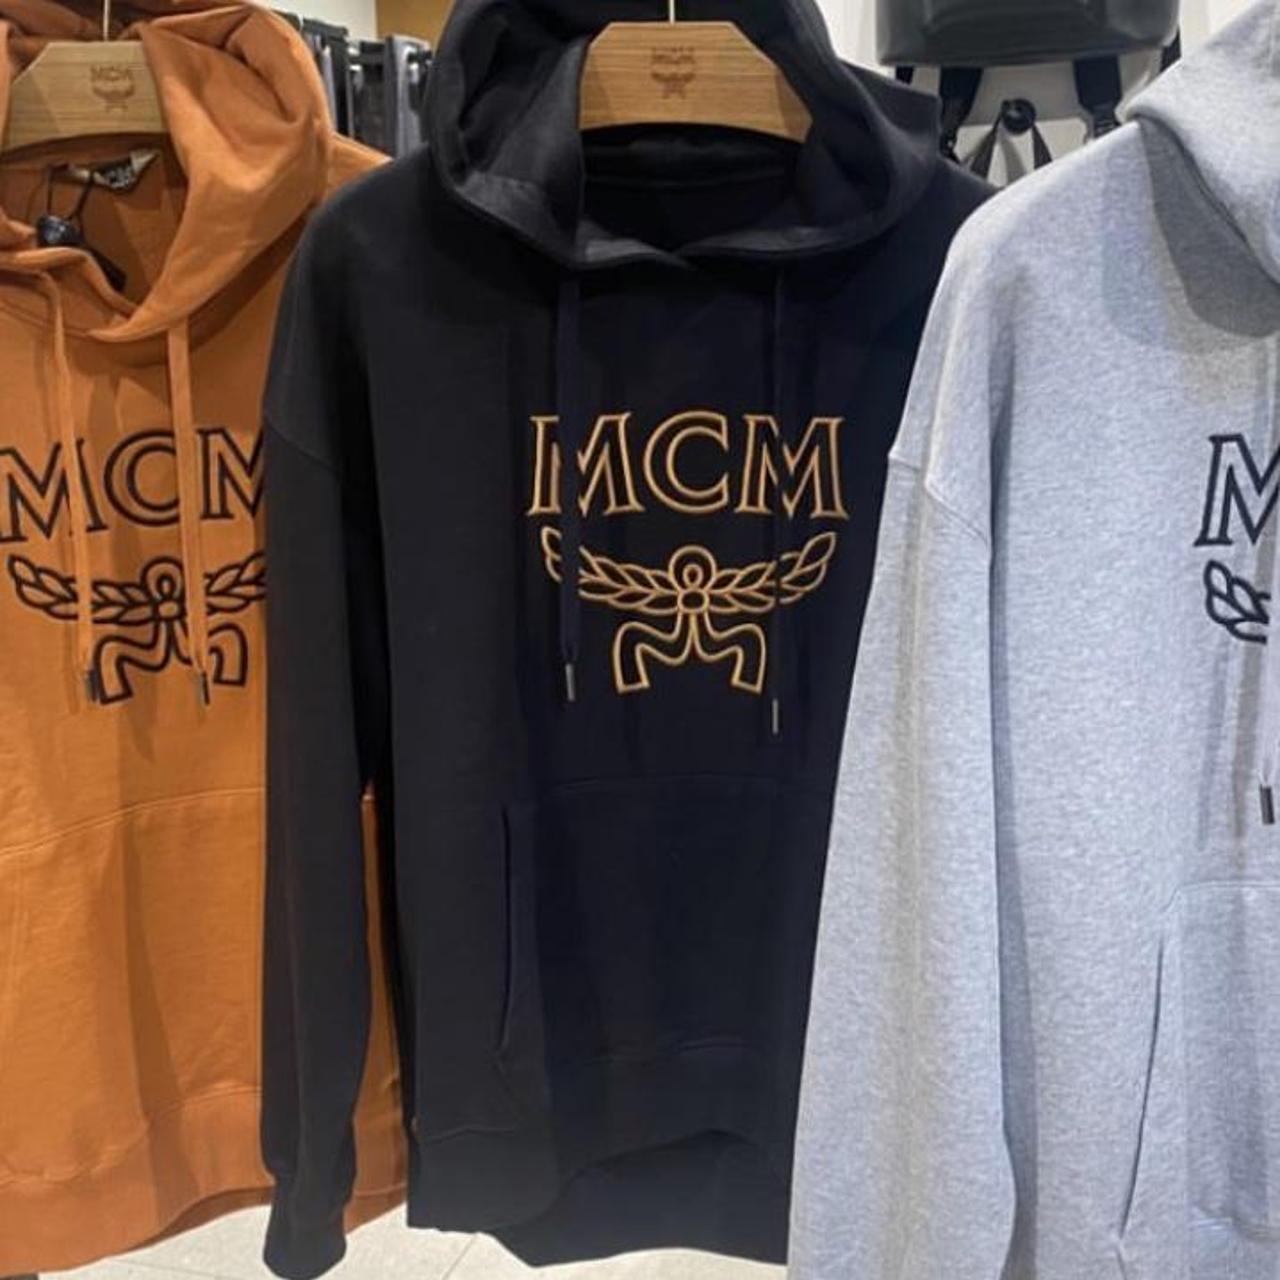 Mcm hoodie new from store over $500 originally got... - Depop